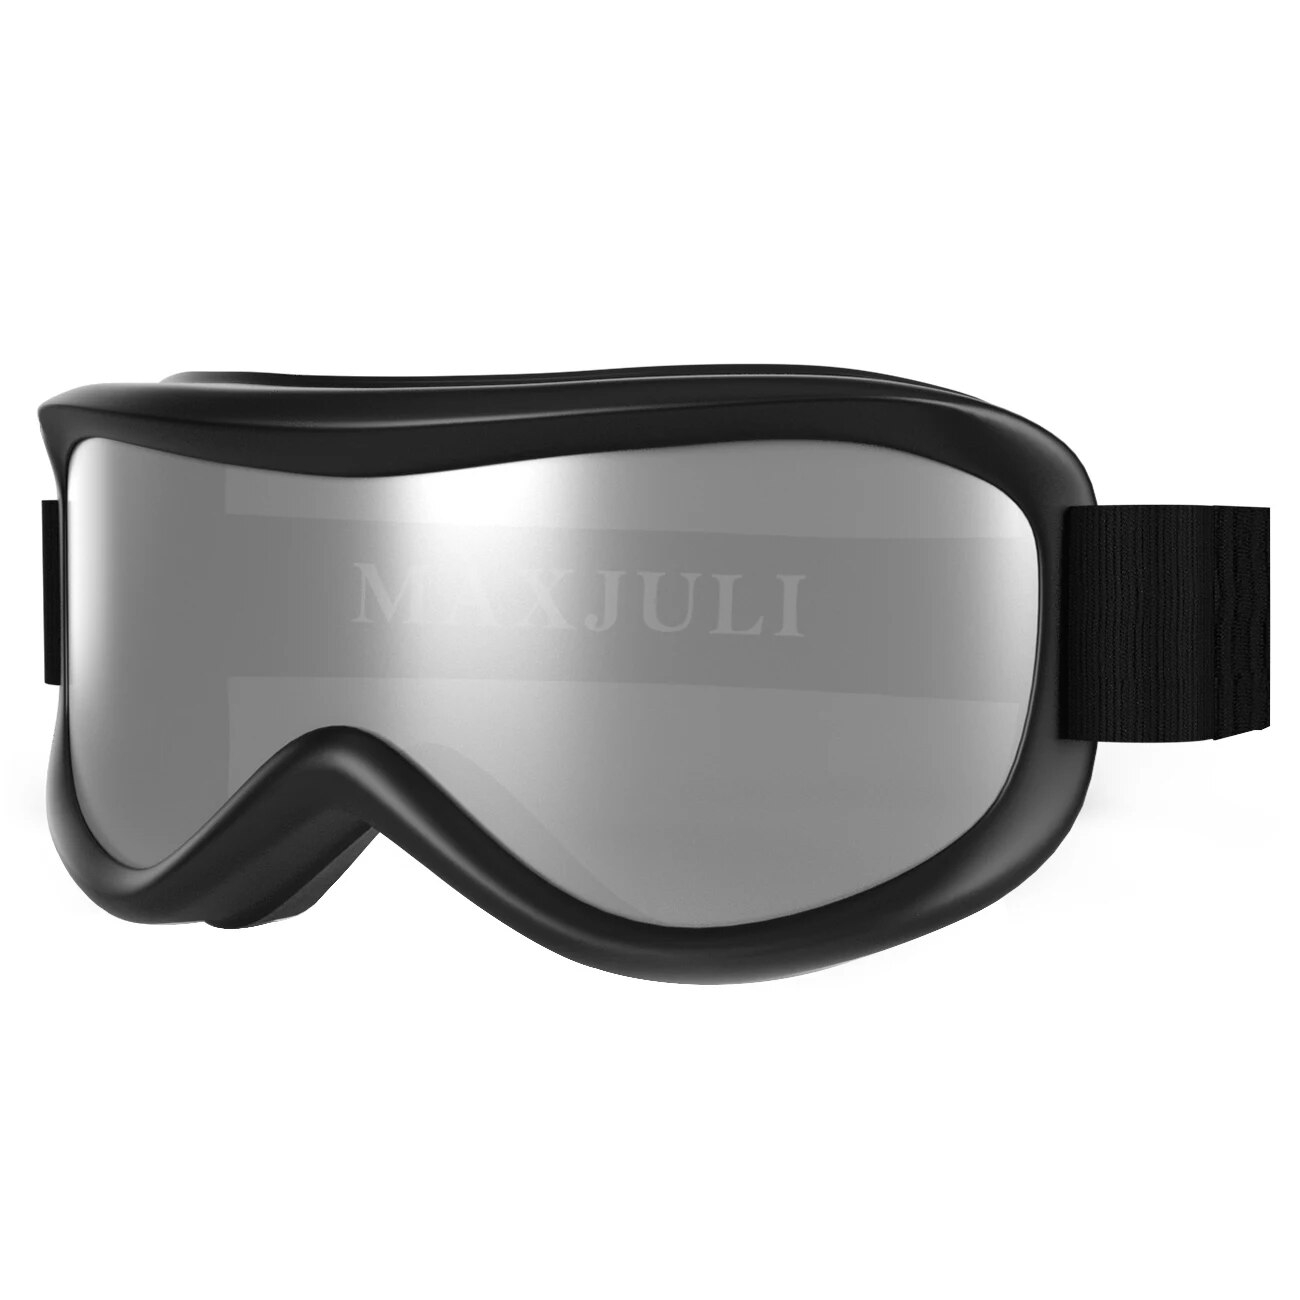 MAXJULI Kids Ski Goggles - Helmet Compatible Snow Goggles For Baby